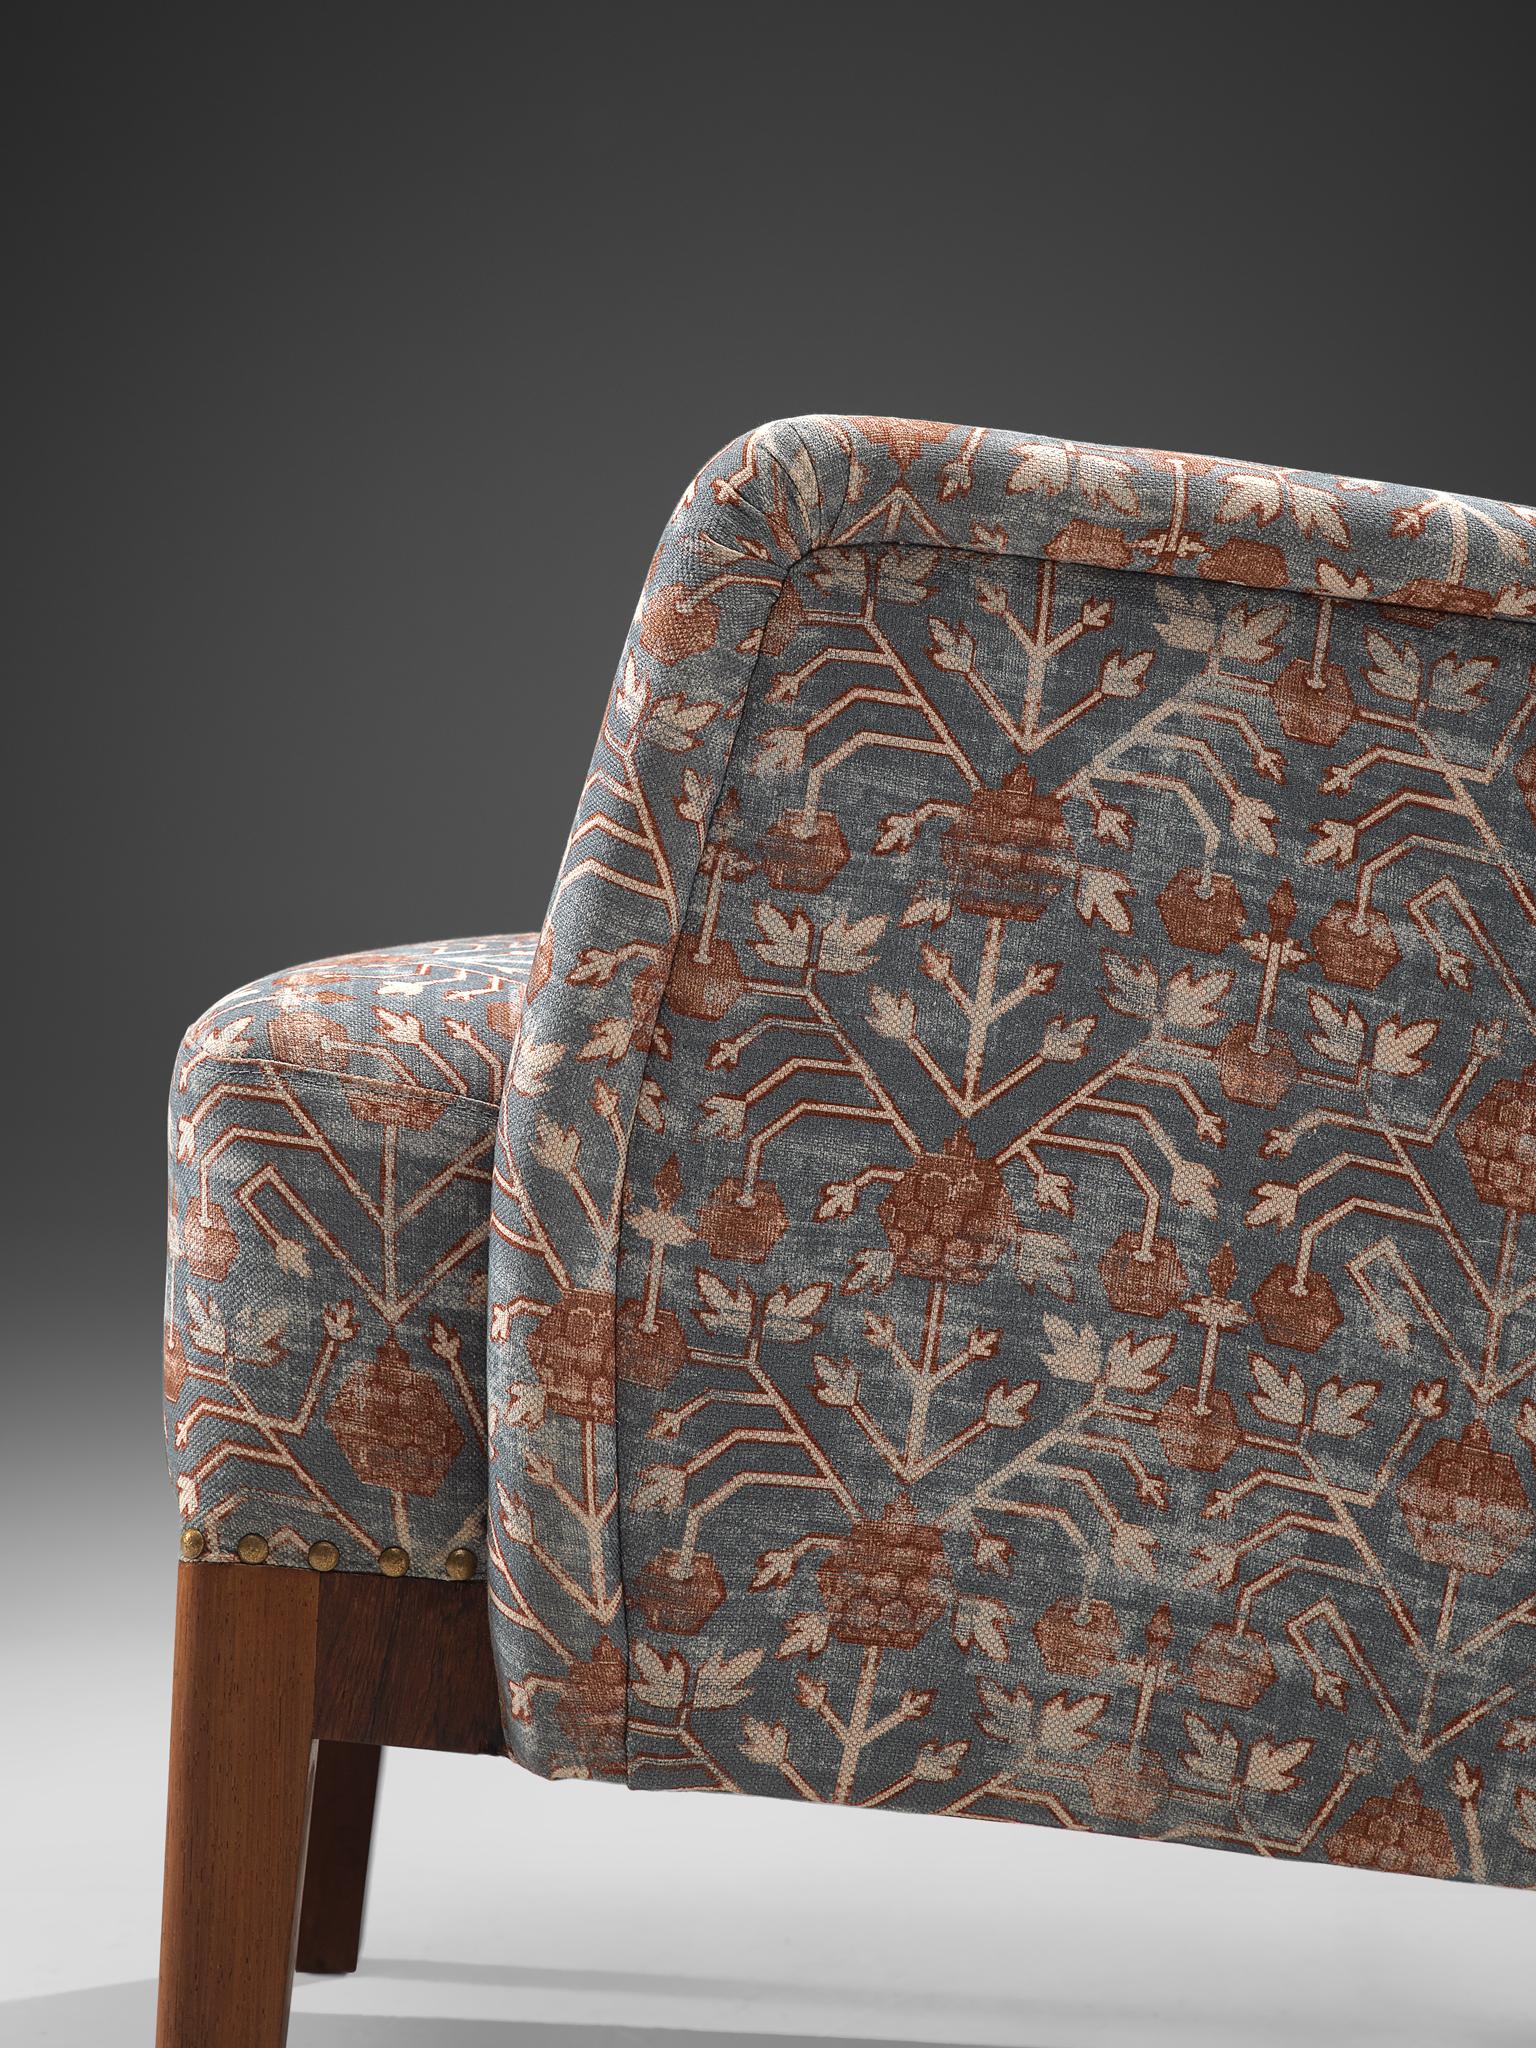 Wool Danish Lounge Chair with ZAK+FOX 'Fantasma' Collection 2020 Upholstery